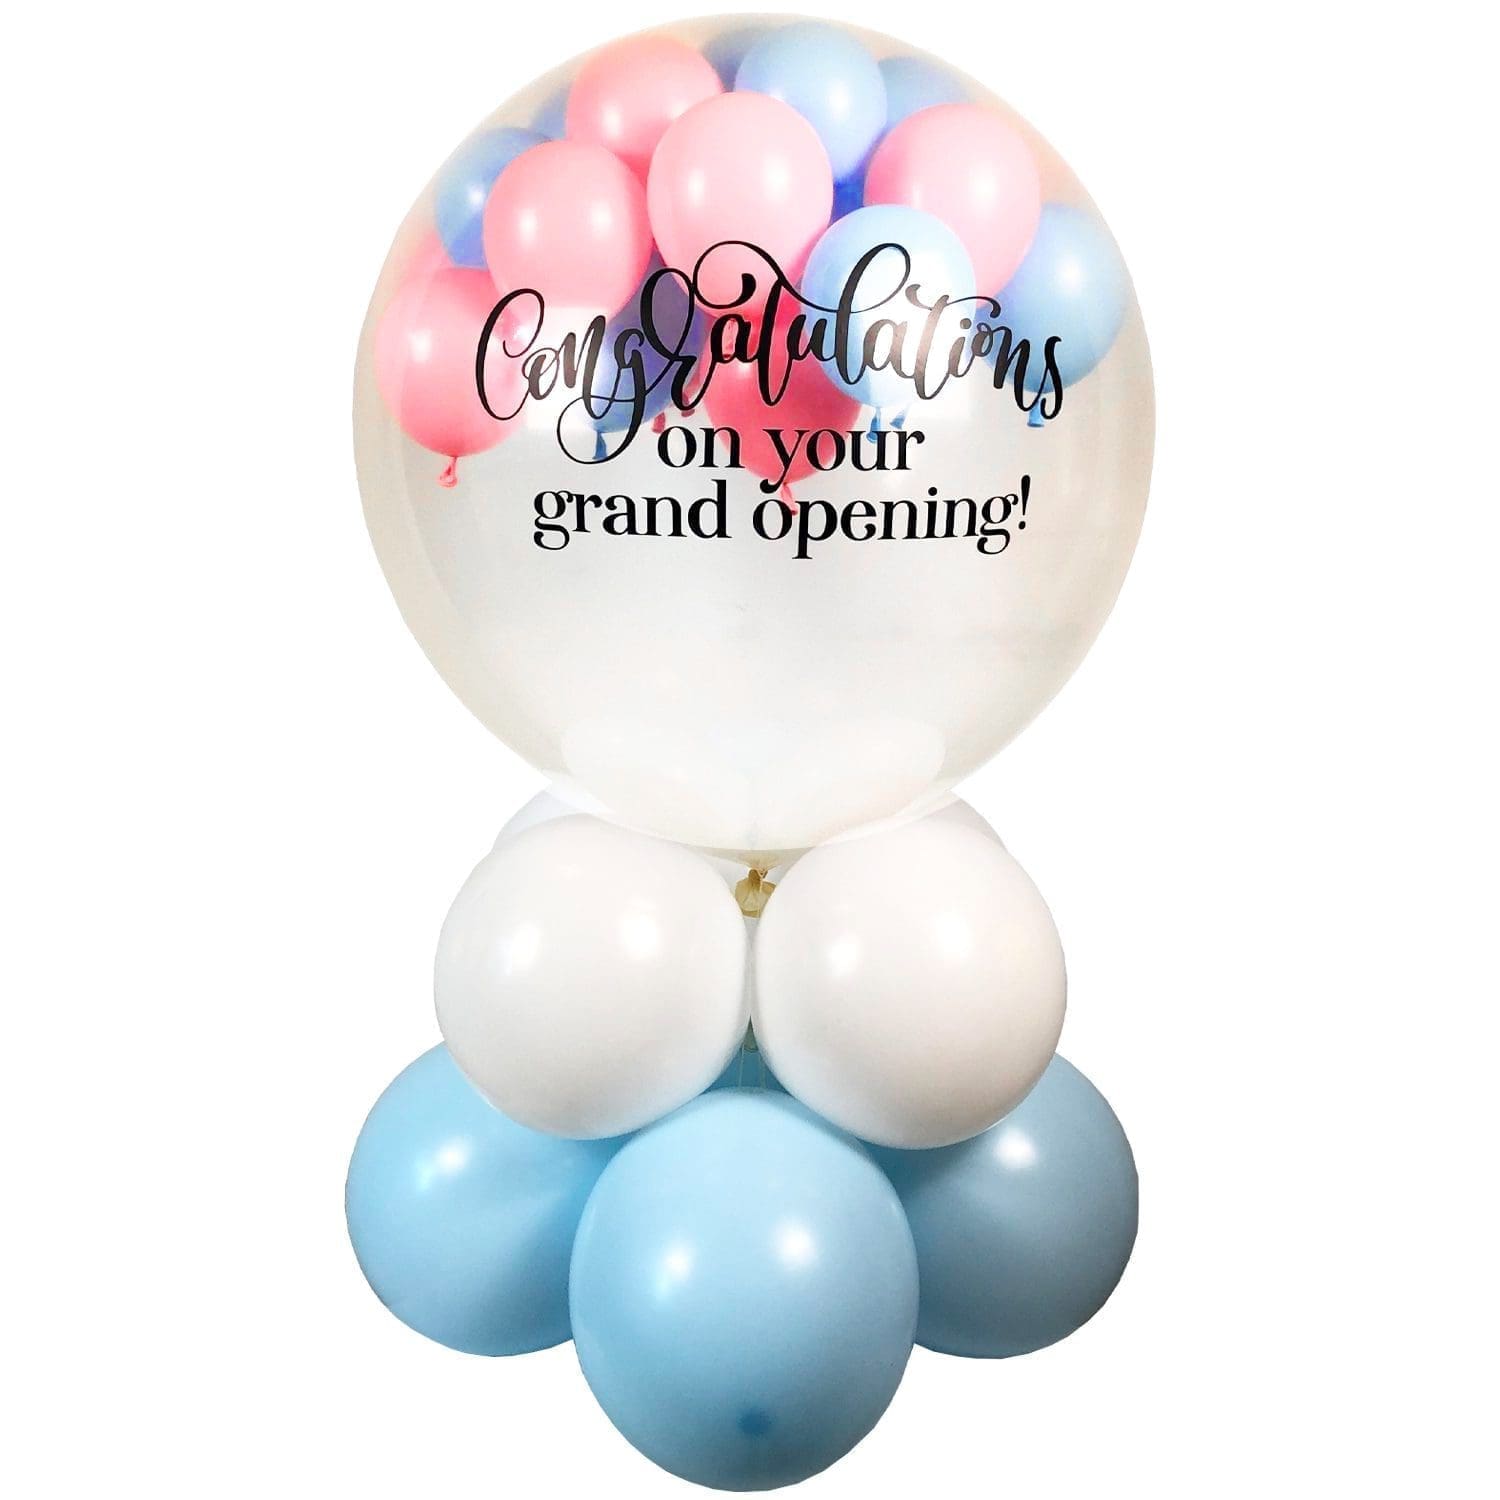 Congratulatory Balloon Pop Gimmick Shop Opening Fly